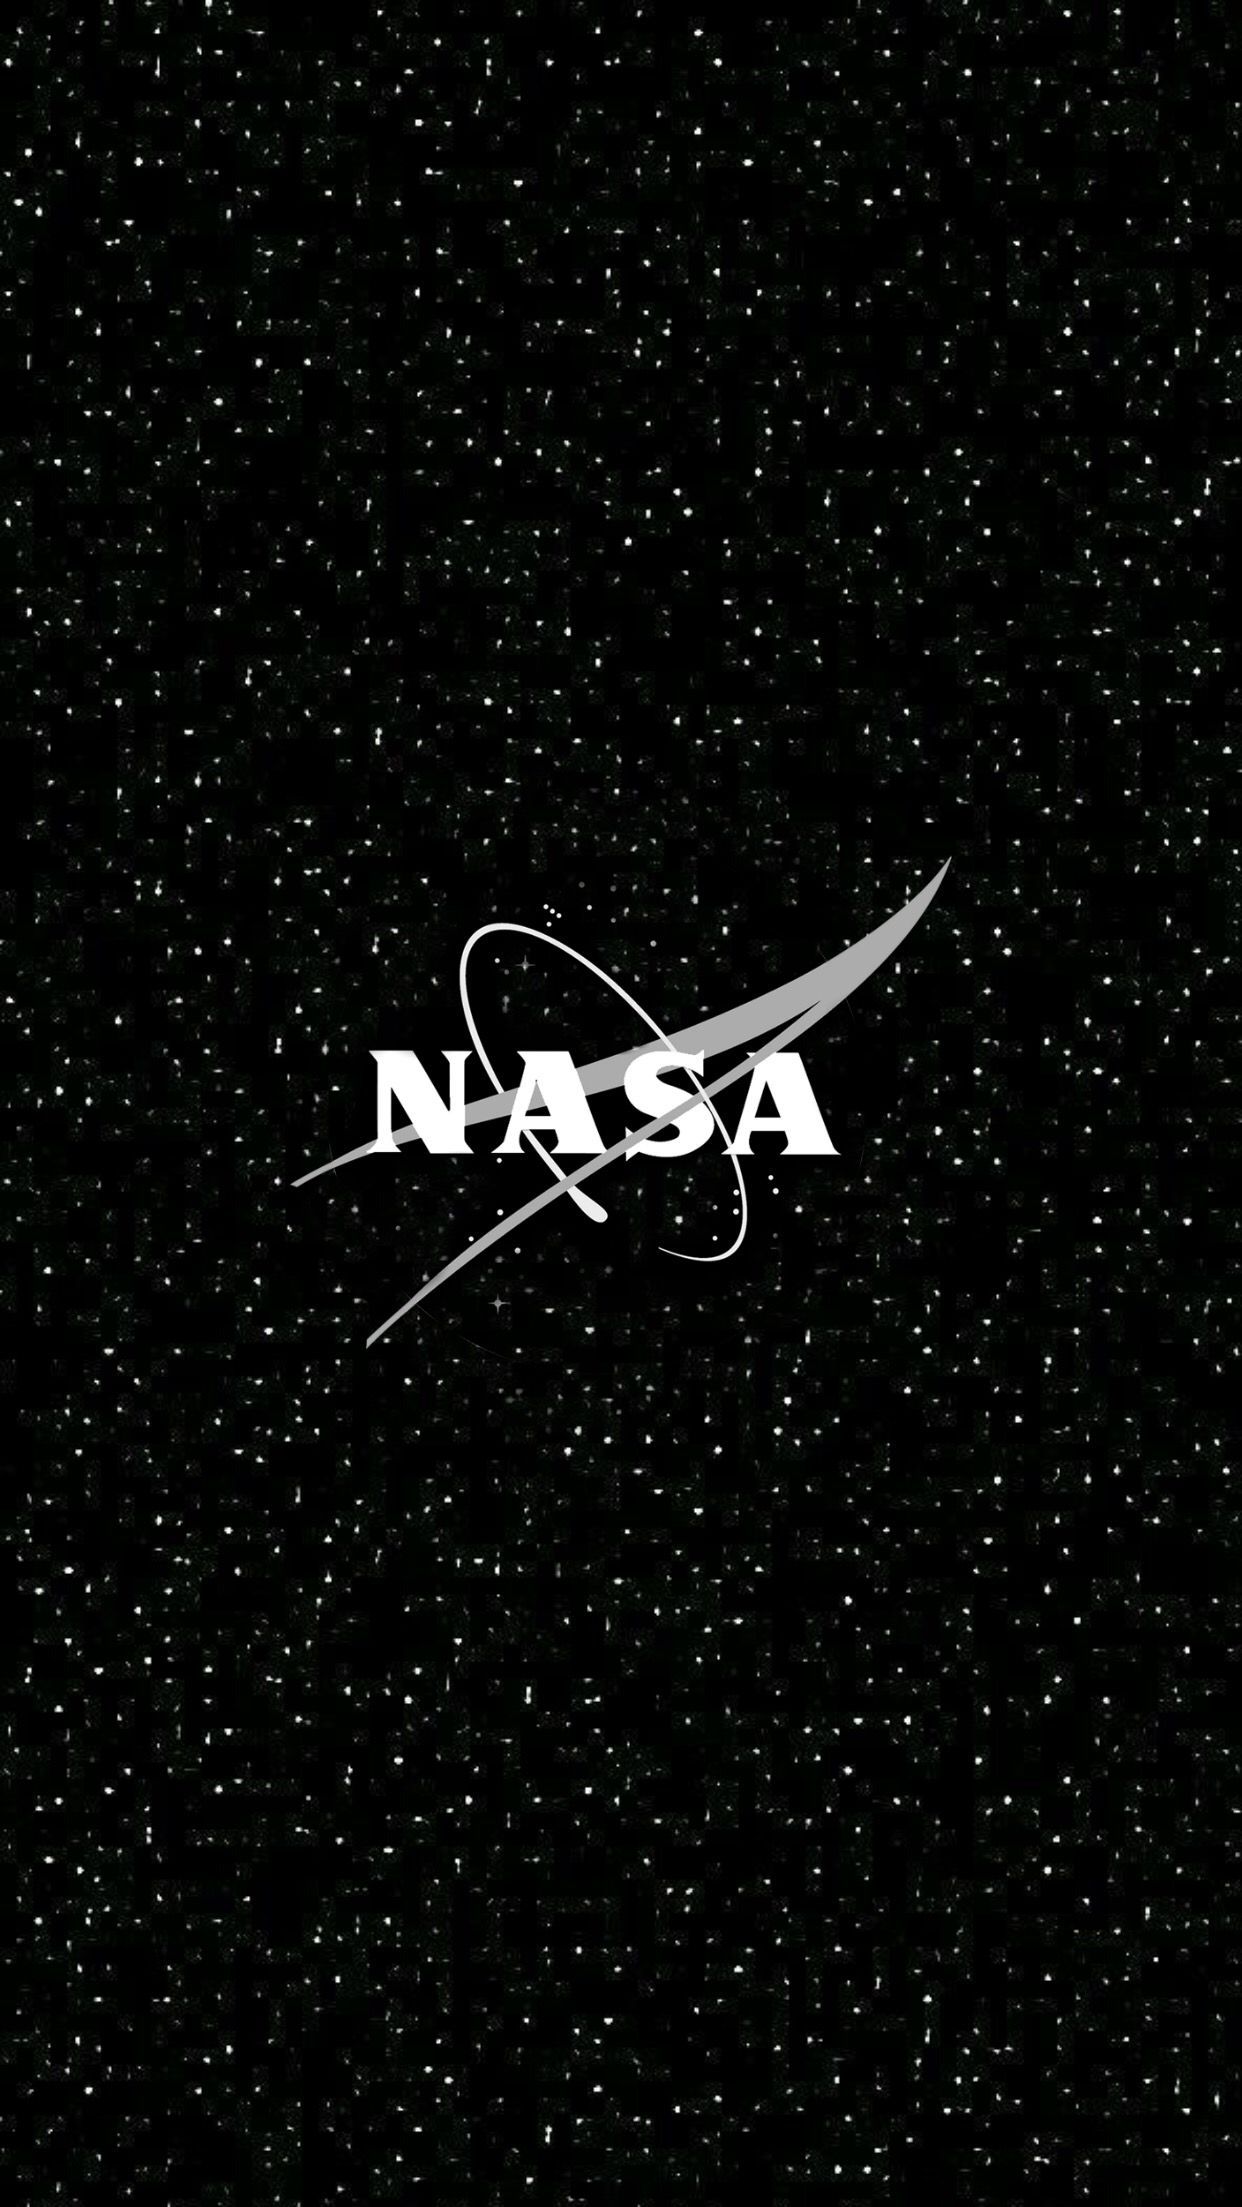 Black and White NASA Wallpaper / NASA BW Wallpaper. Nasa wallpaper, iPhone wallpaper nasa, Astronaut wallpaper